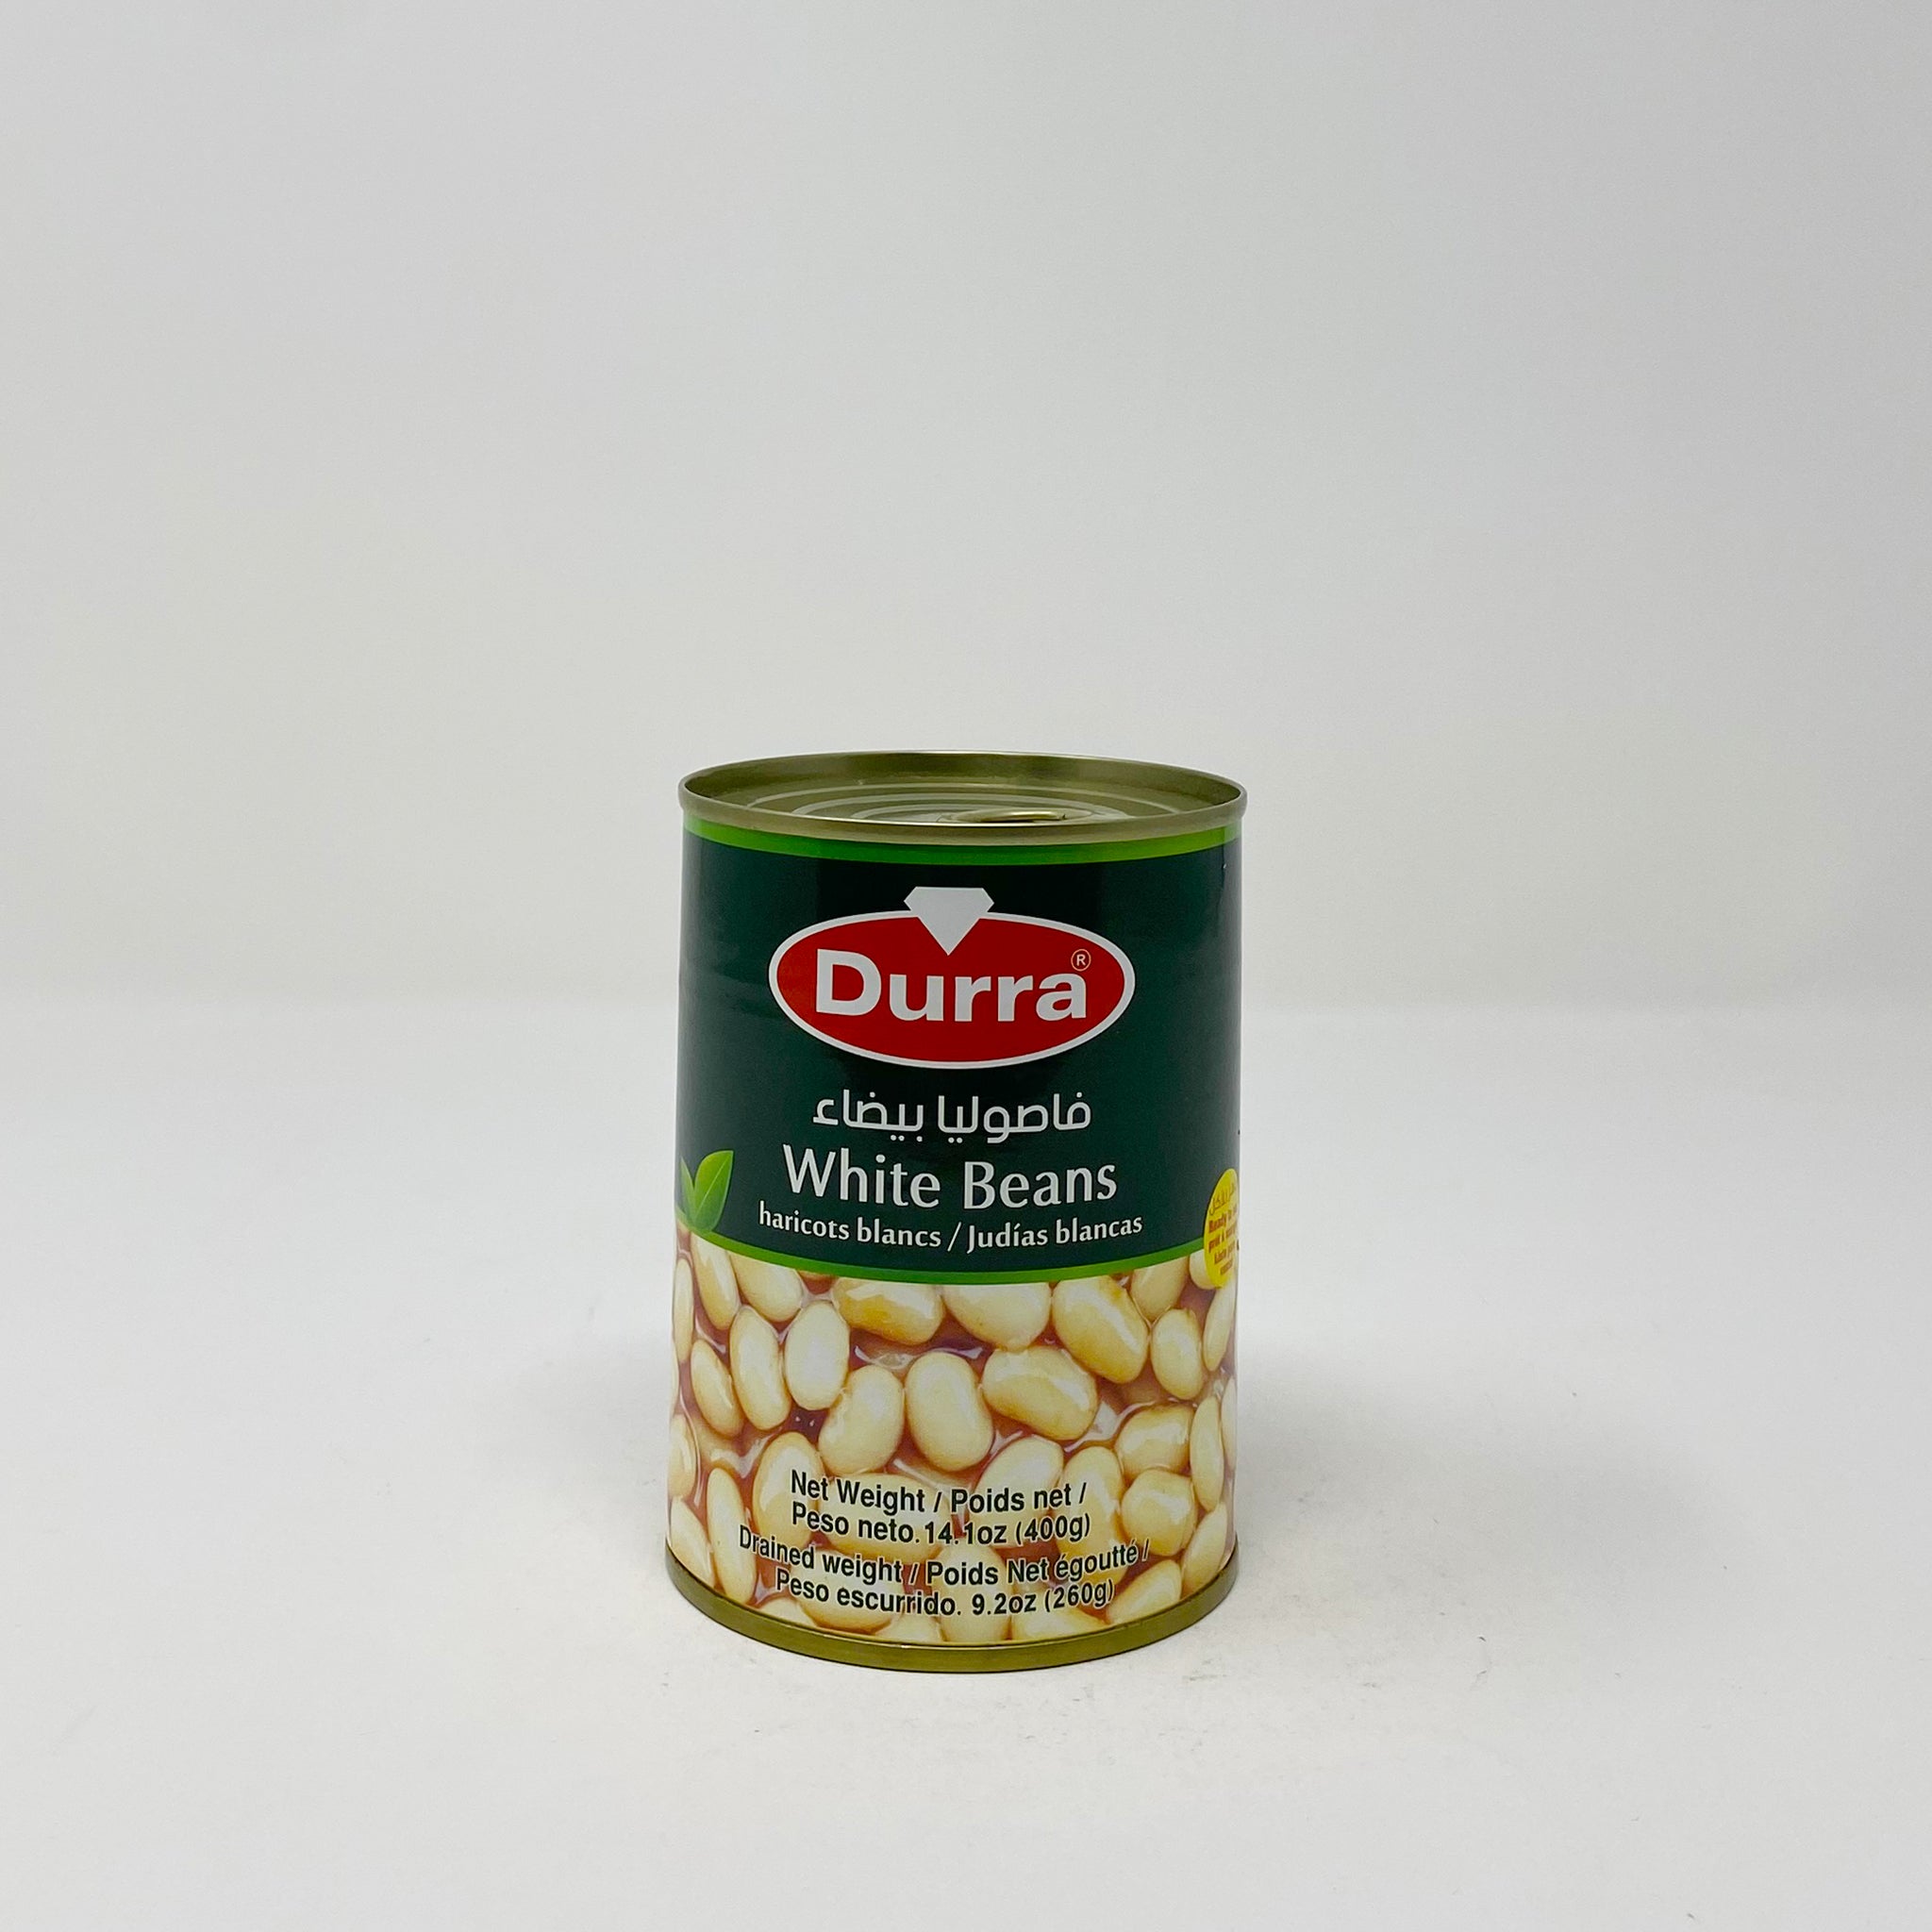 Durra White beans 14 oz